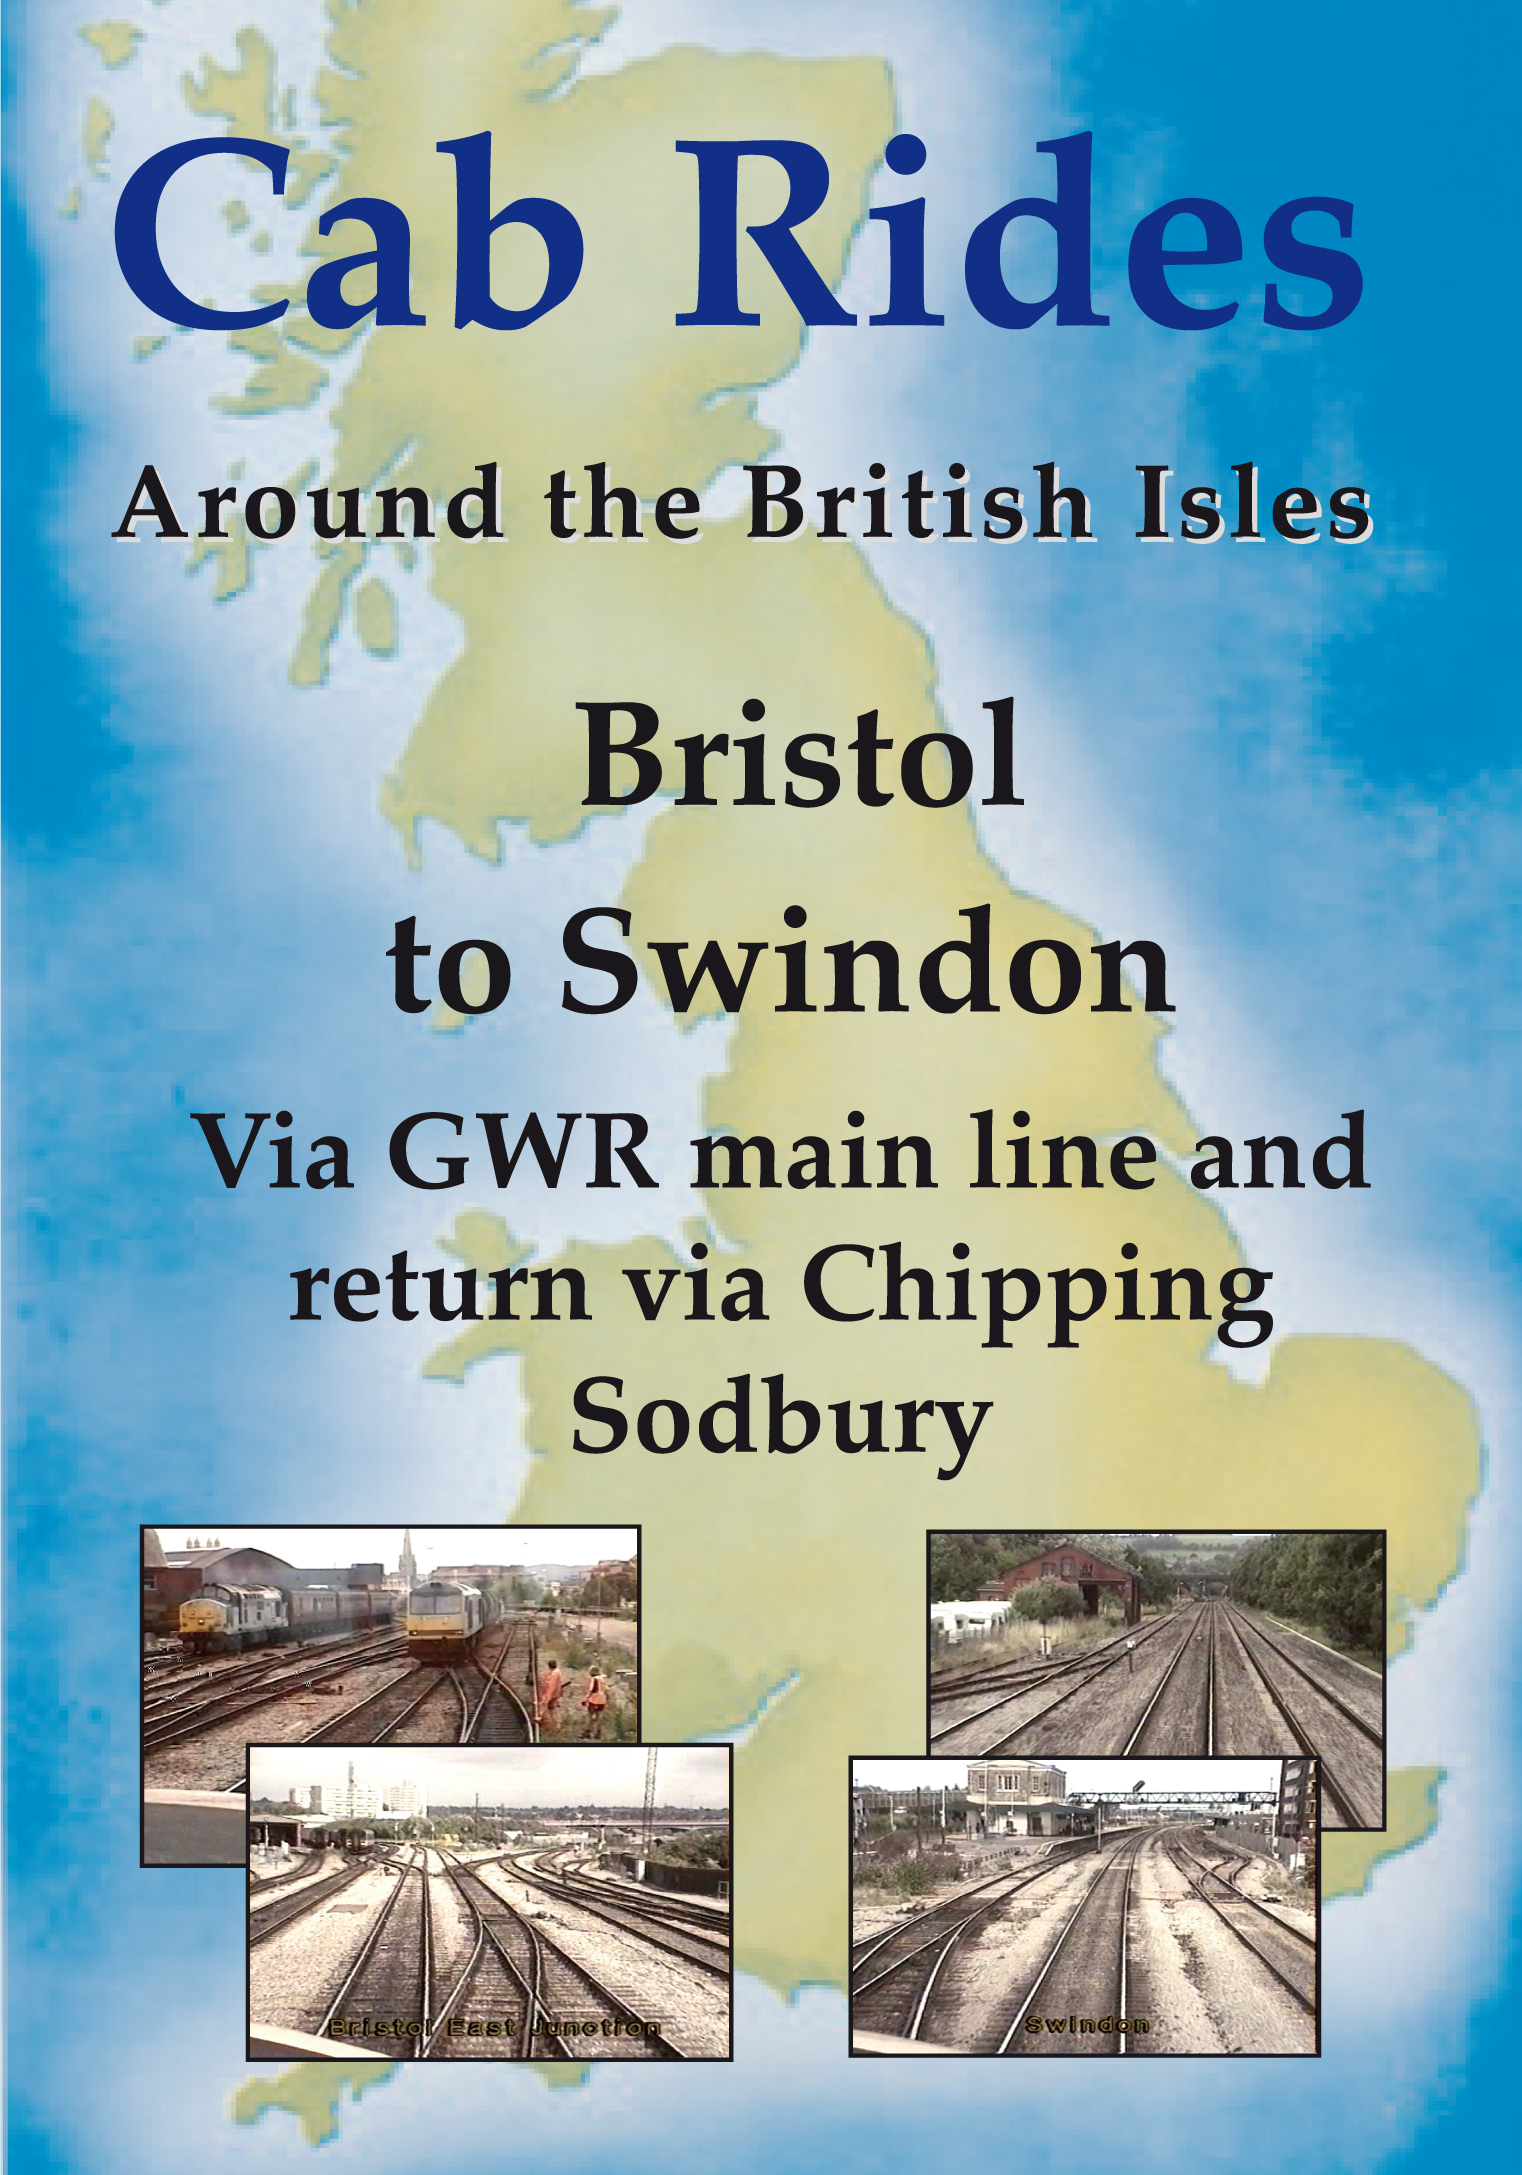 Cab Rides Around the British Isles: Bristol to Swindon via GWR Main Line and return via Chipping Sodbury